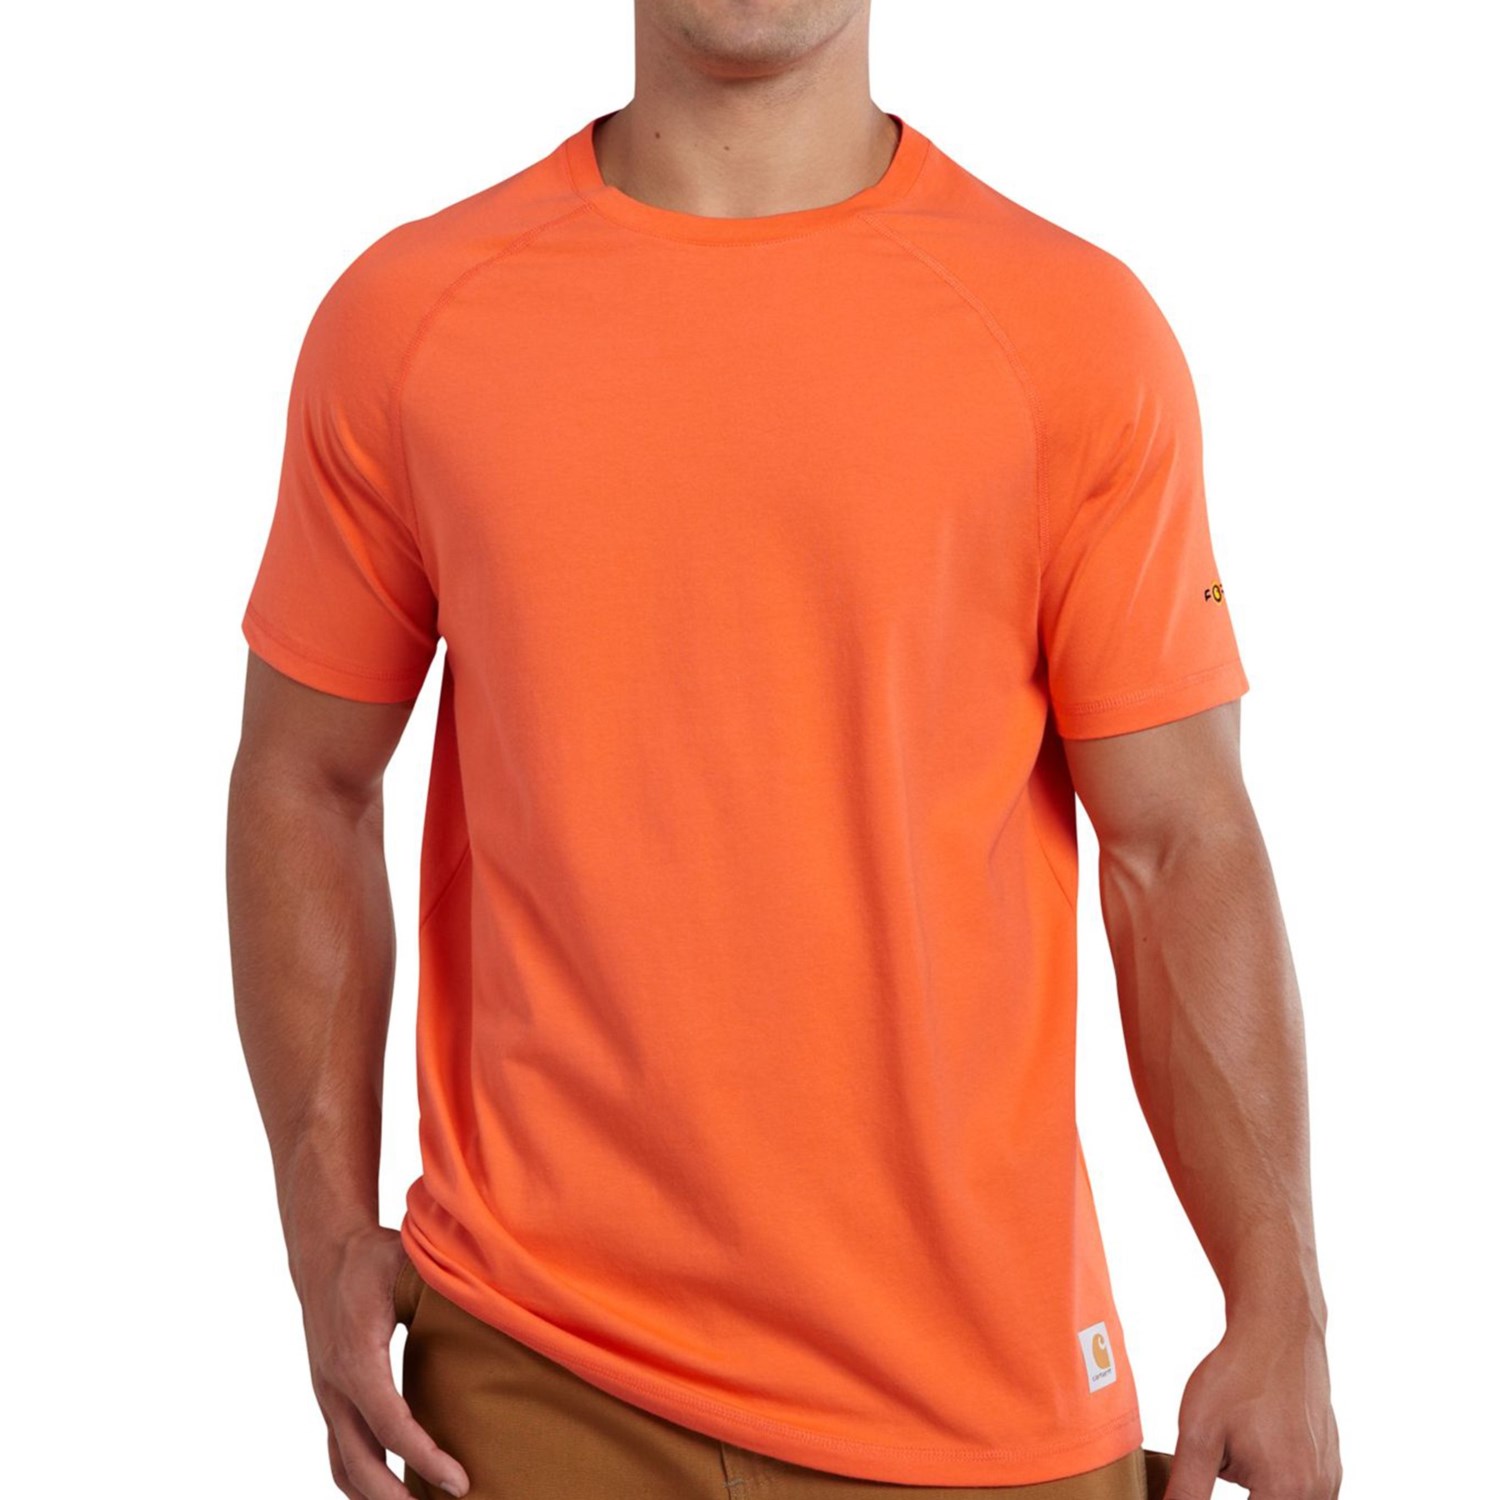 Carhartt Force Cotton Delmont T-Shirt (For Men)